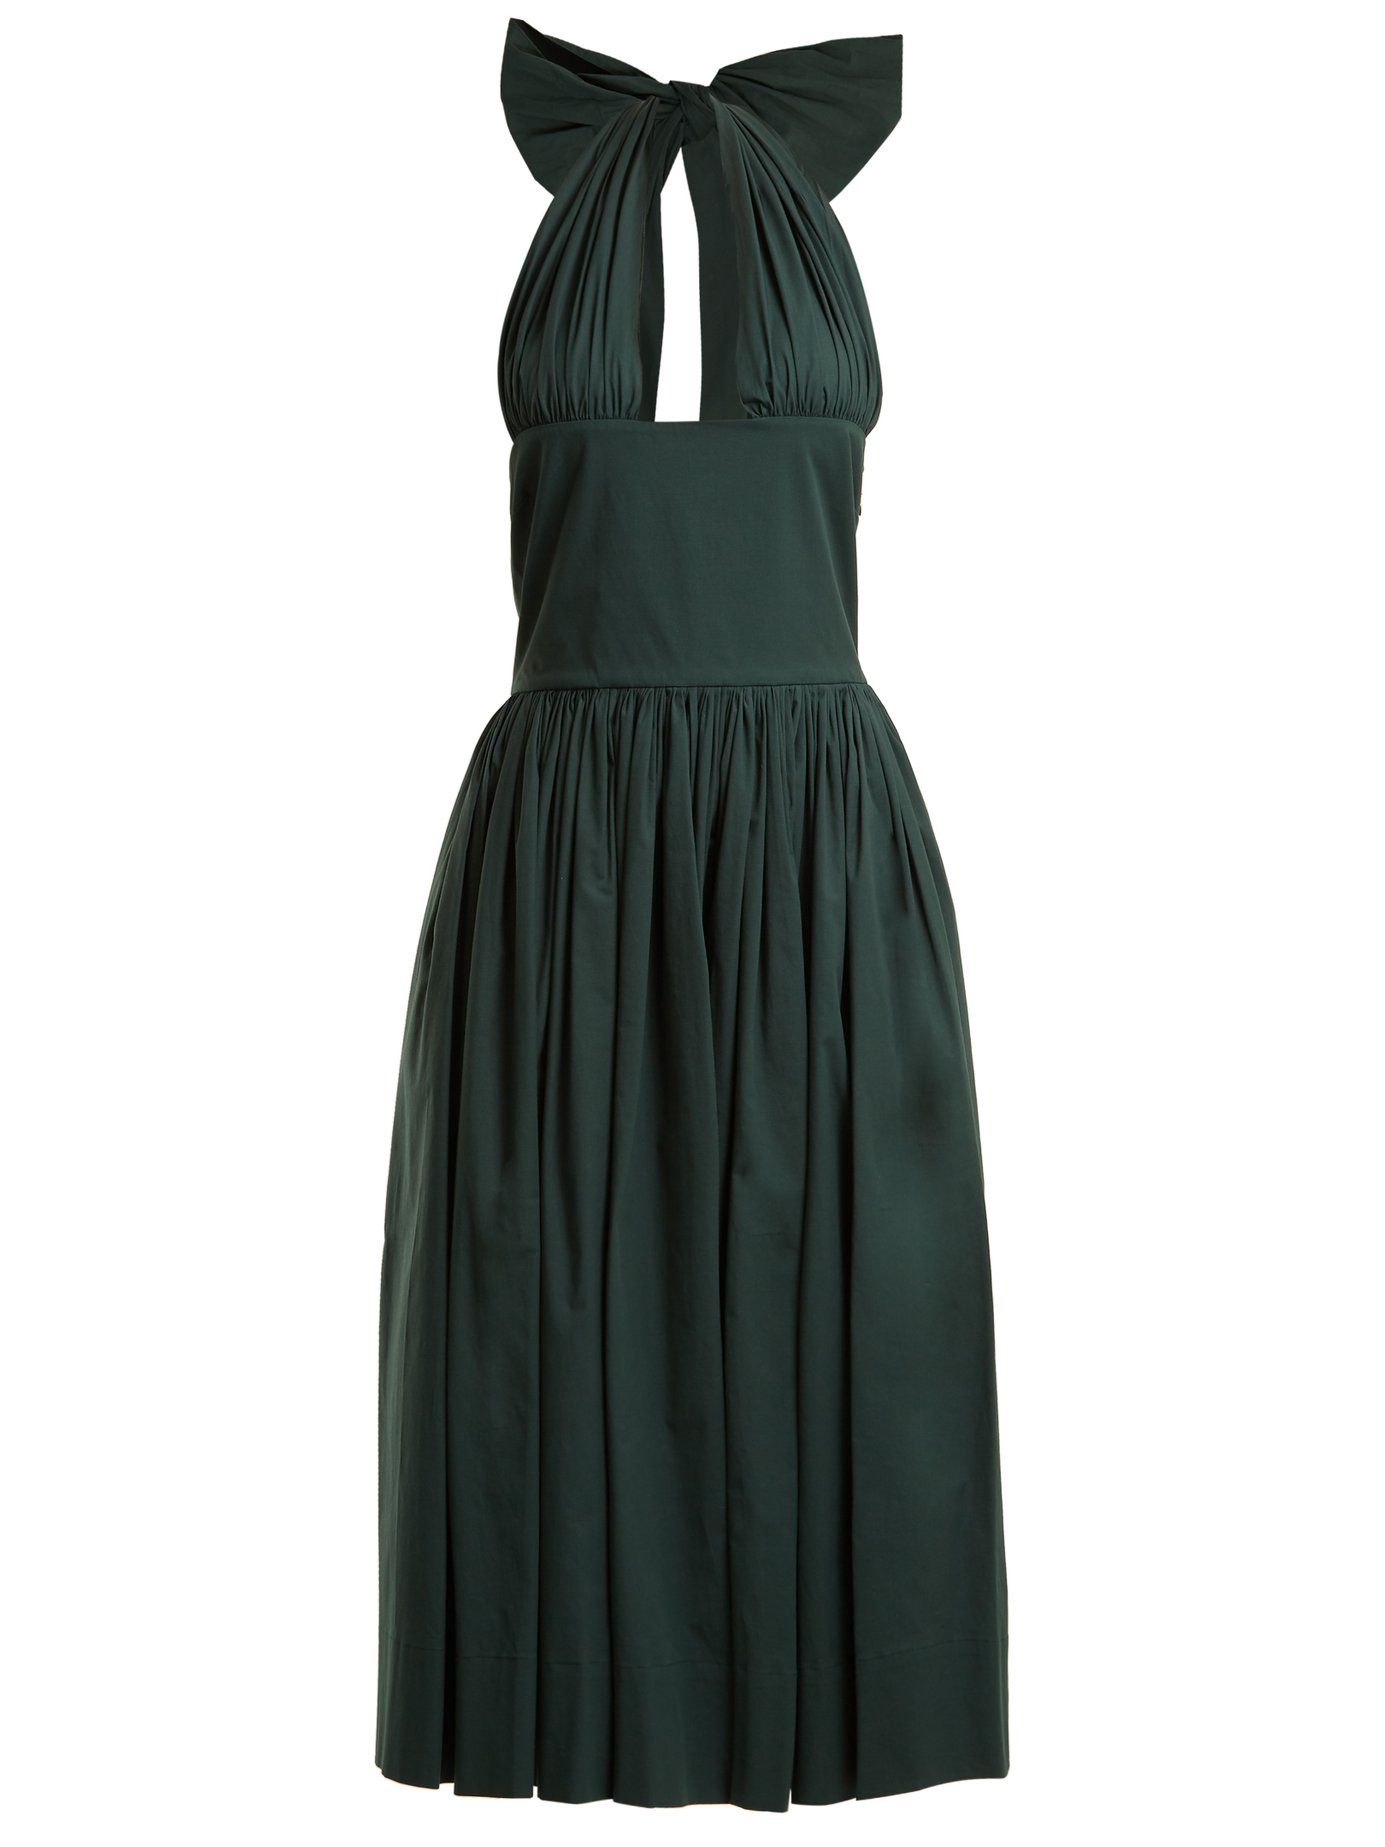 Rochas - Tie-Neck Stretch-Cotton Dress | FASHION STYLE FAN